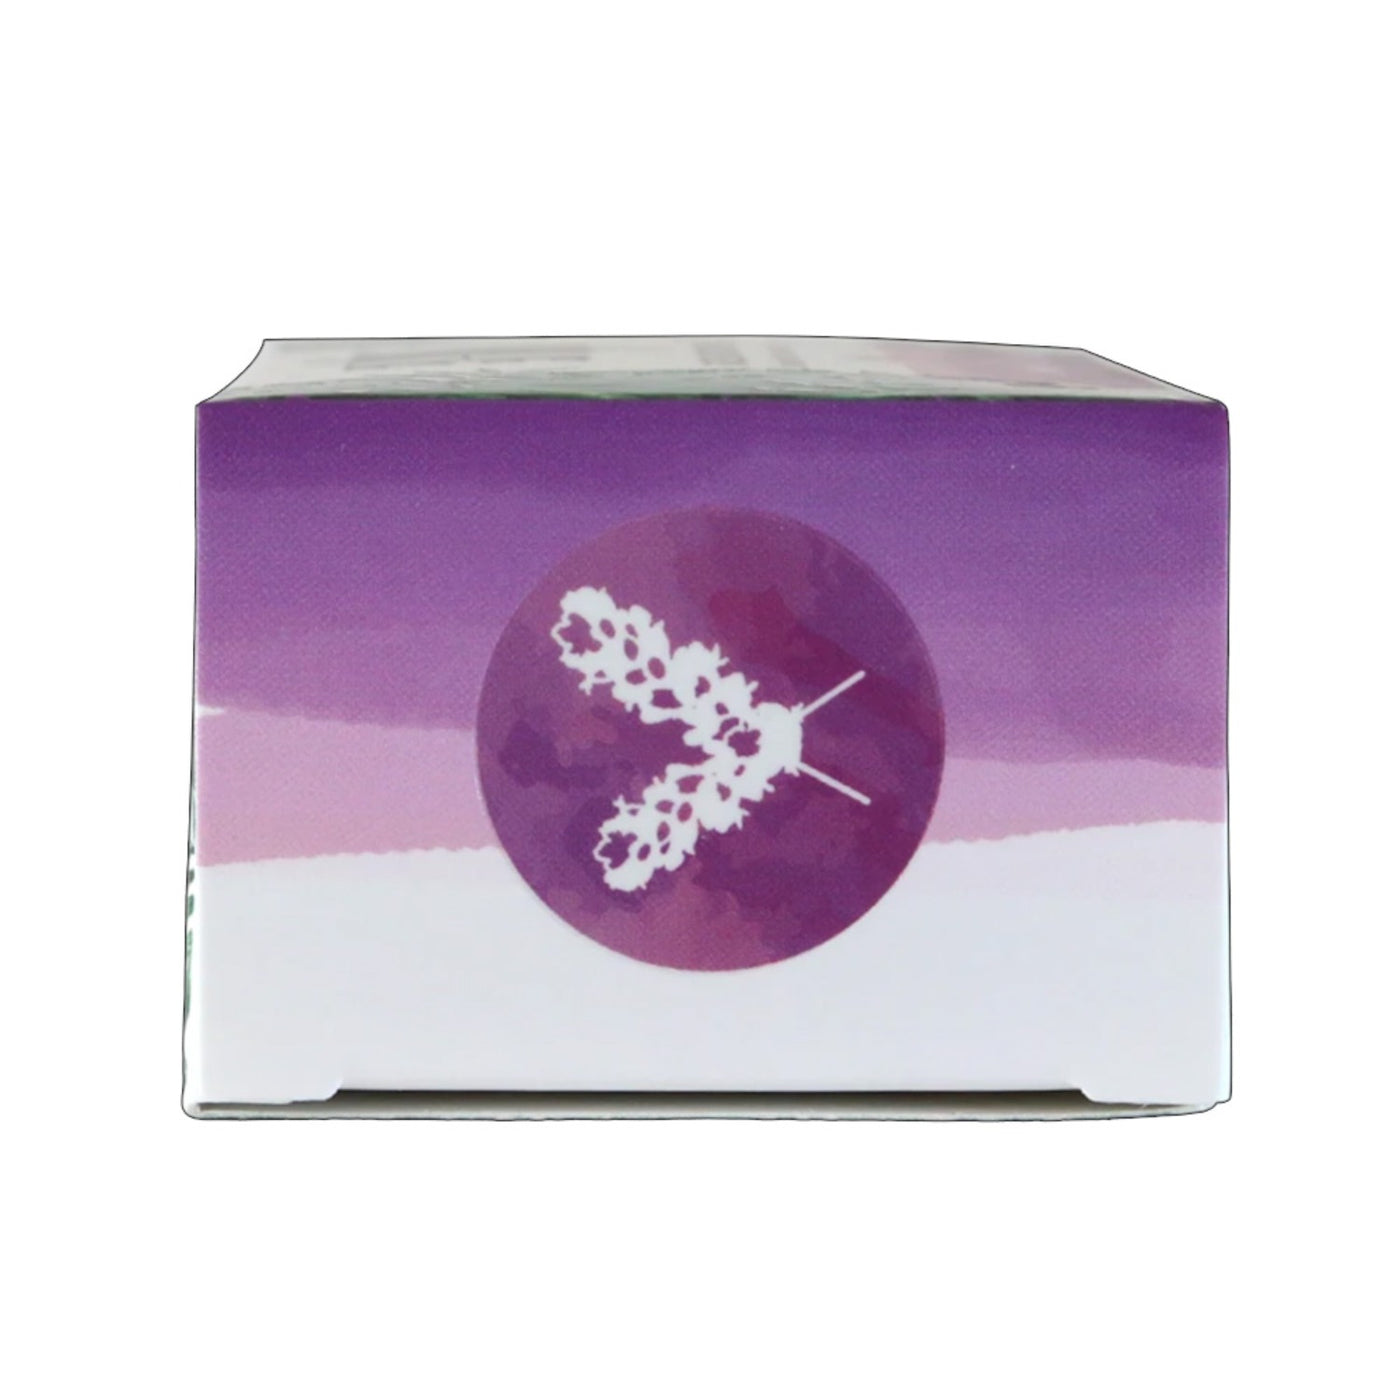 SELF CARE - Organic Fiji Soap Lavender